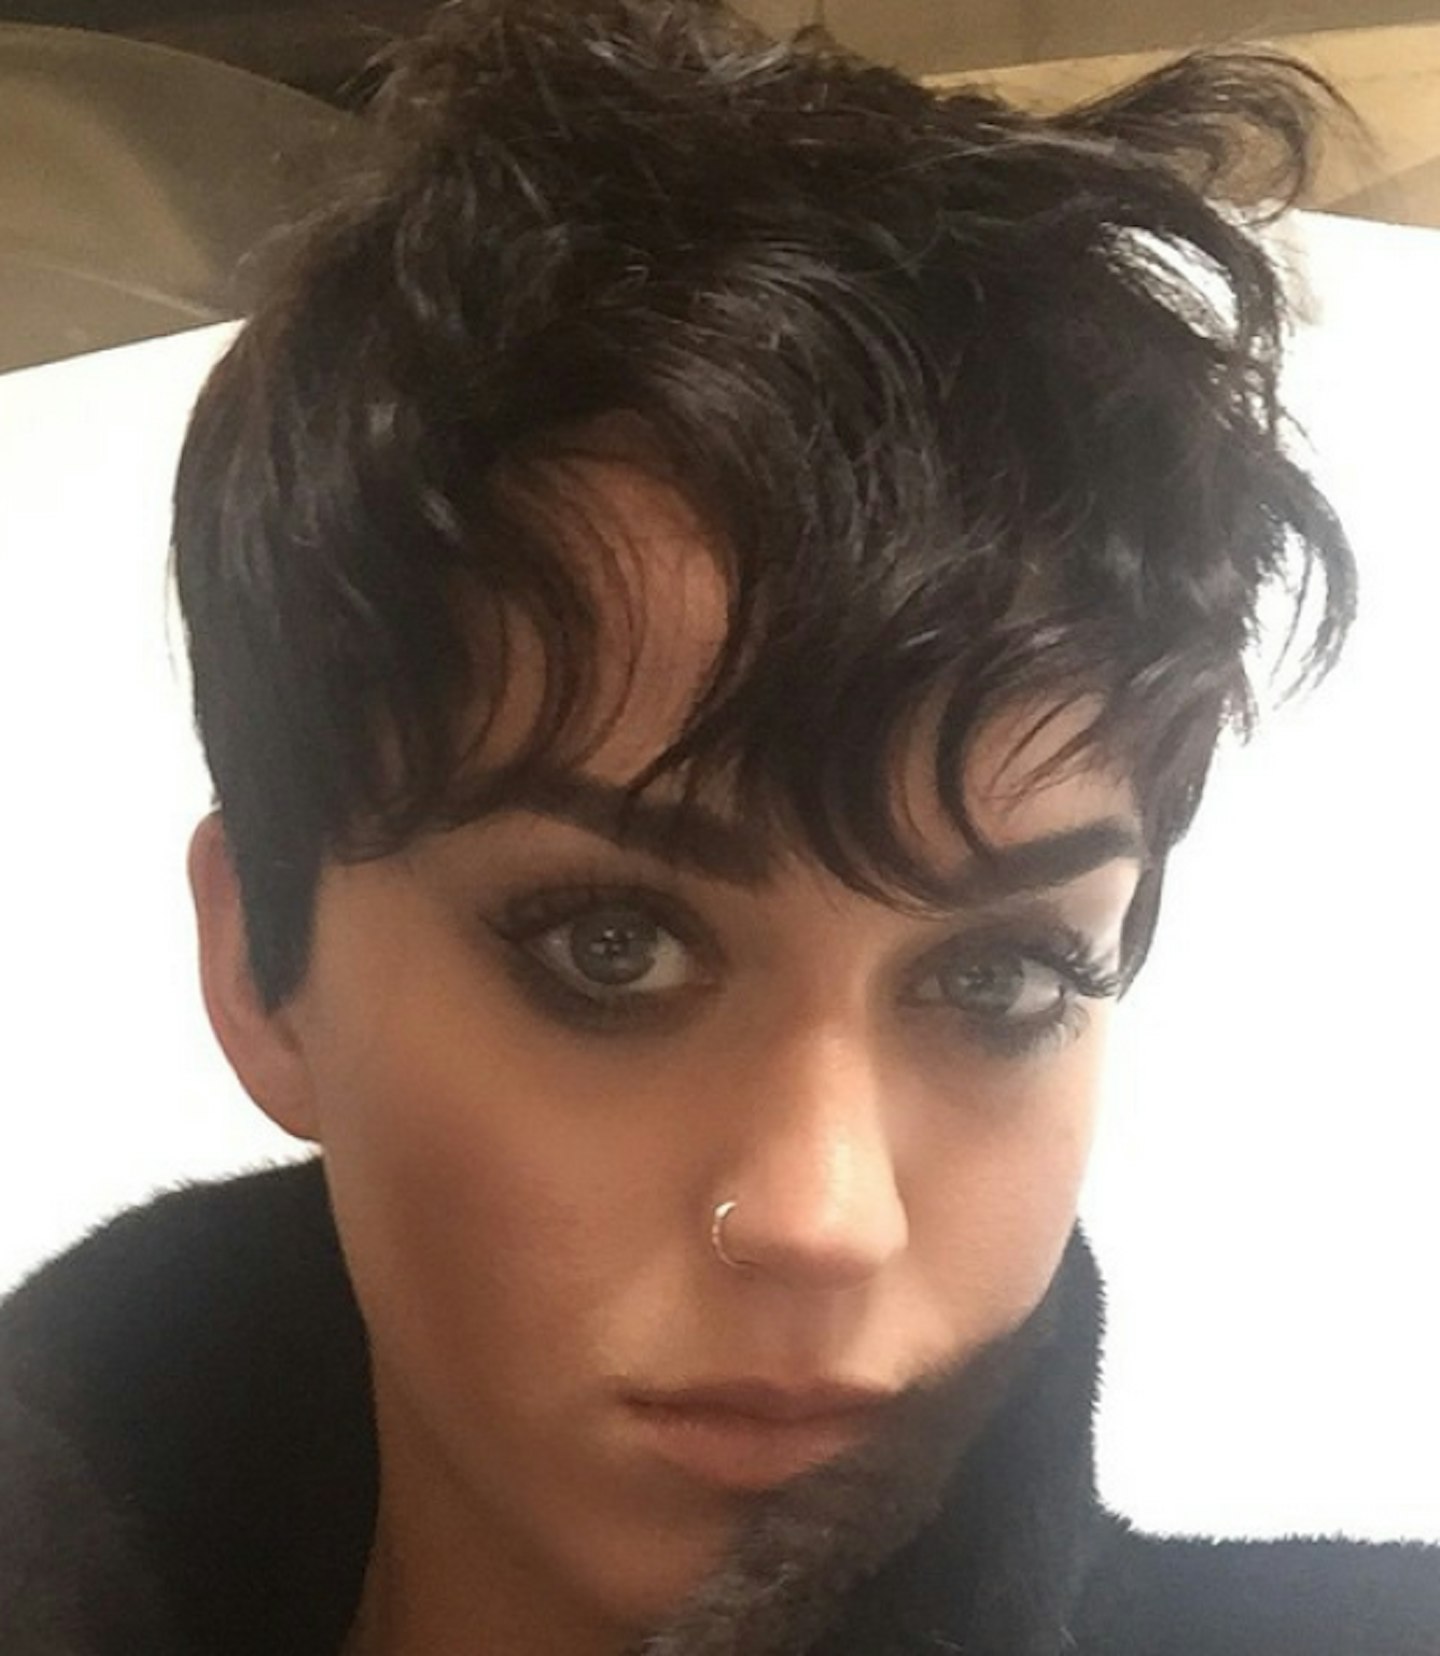 Wednesday: Katy Perry's new 'do